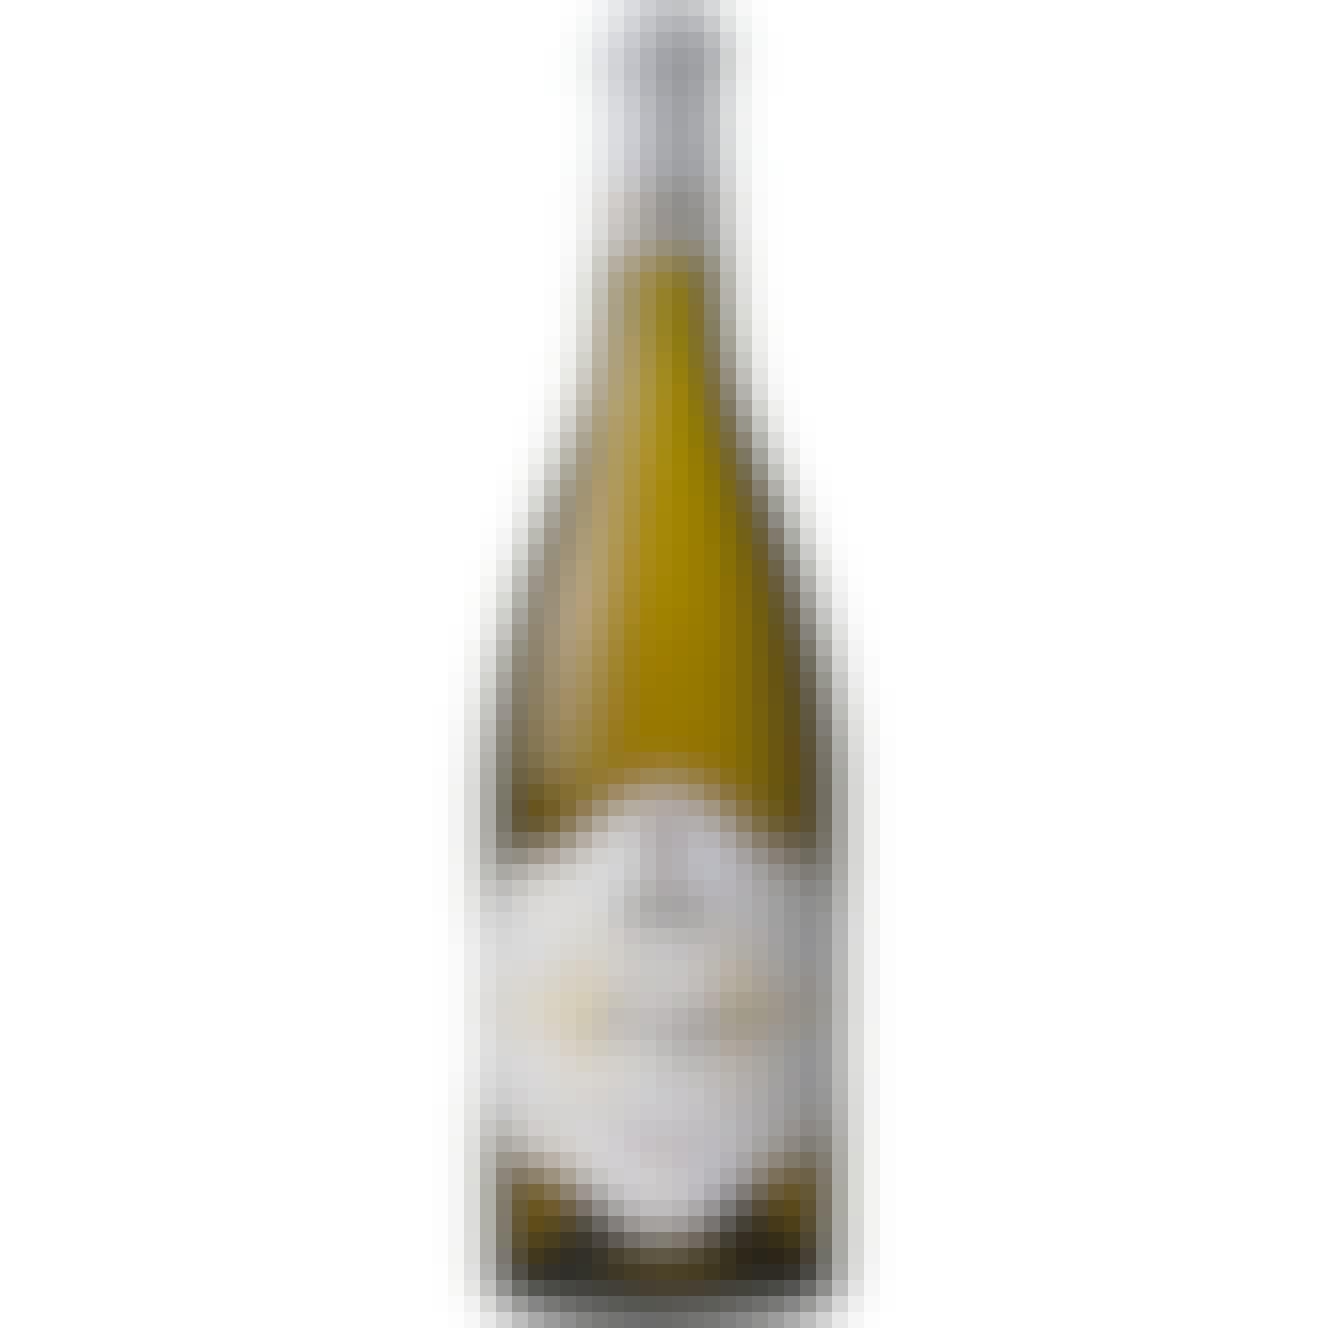 Semper Fort Ross Chardonnay 2016 750ml